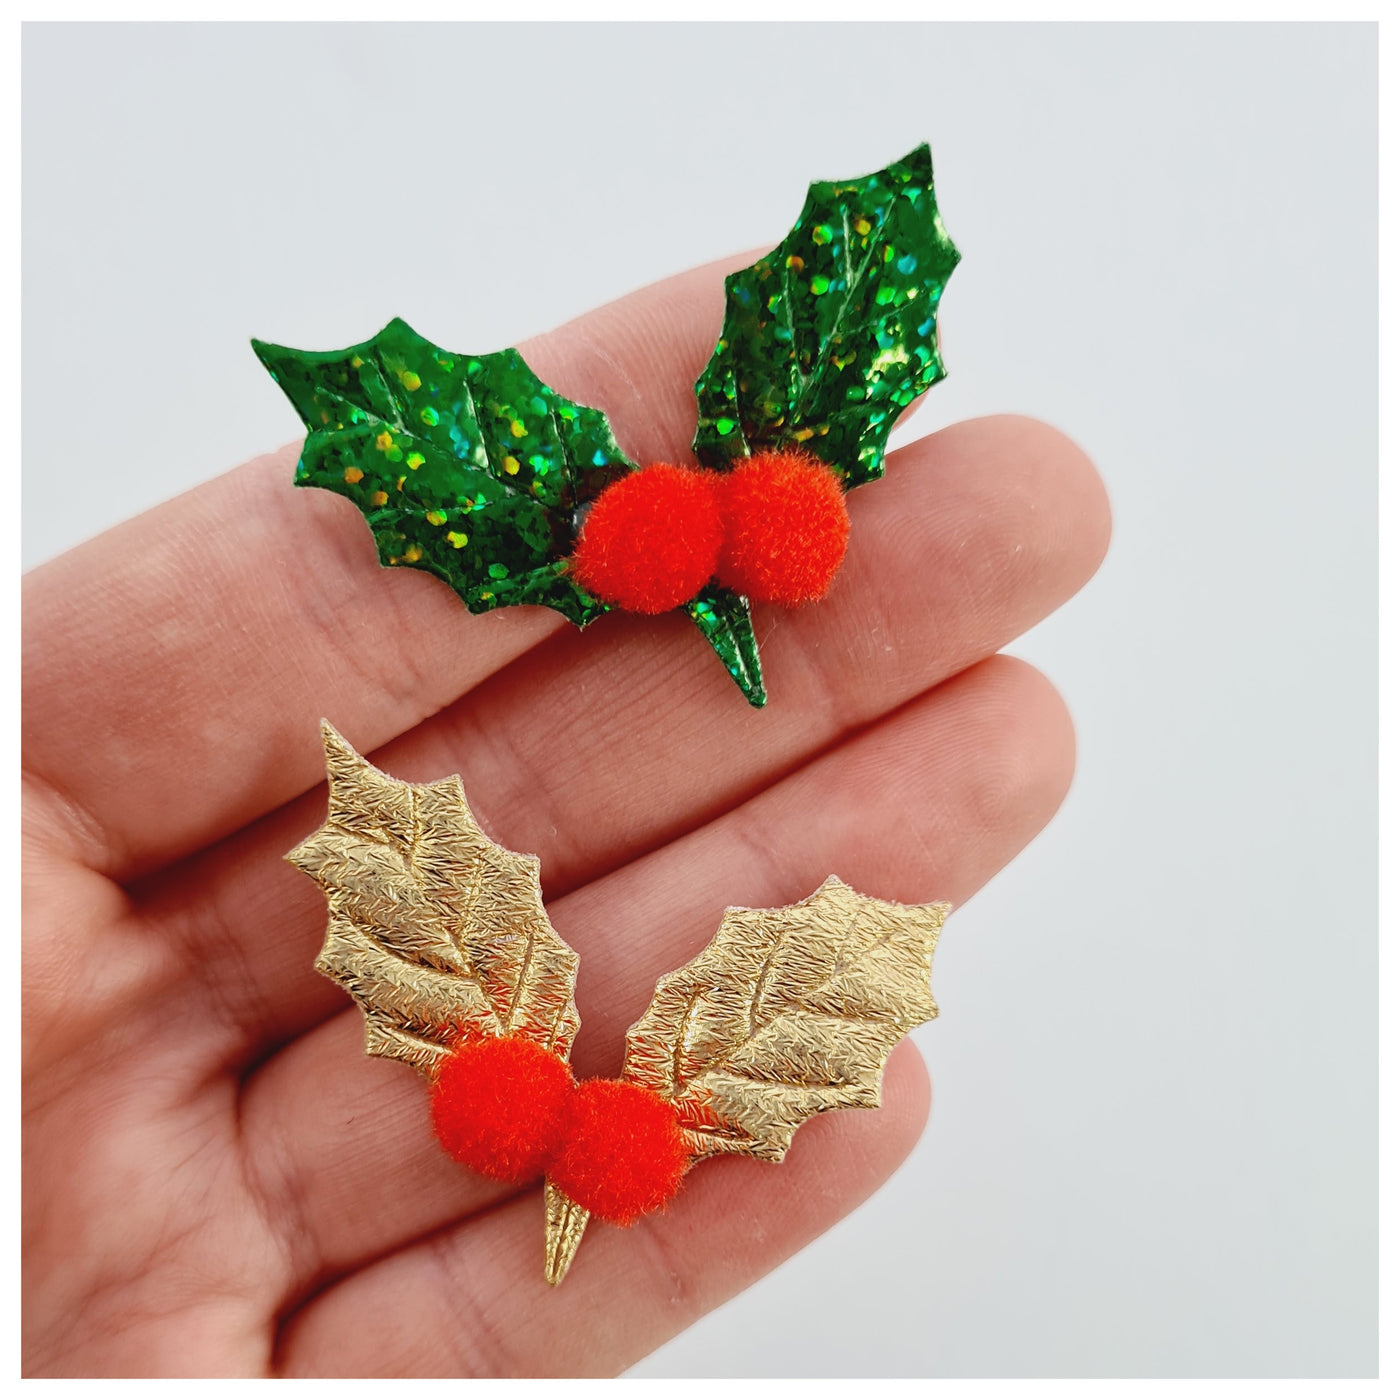 5 x Holly Leaf Embellishments (2 colour options)